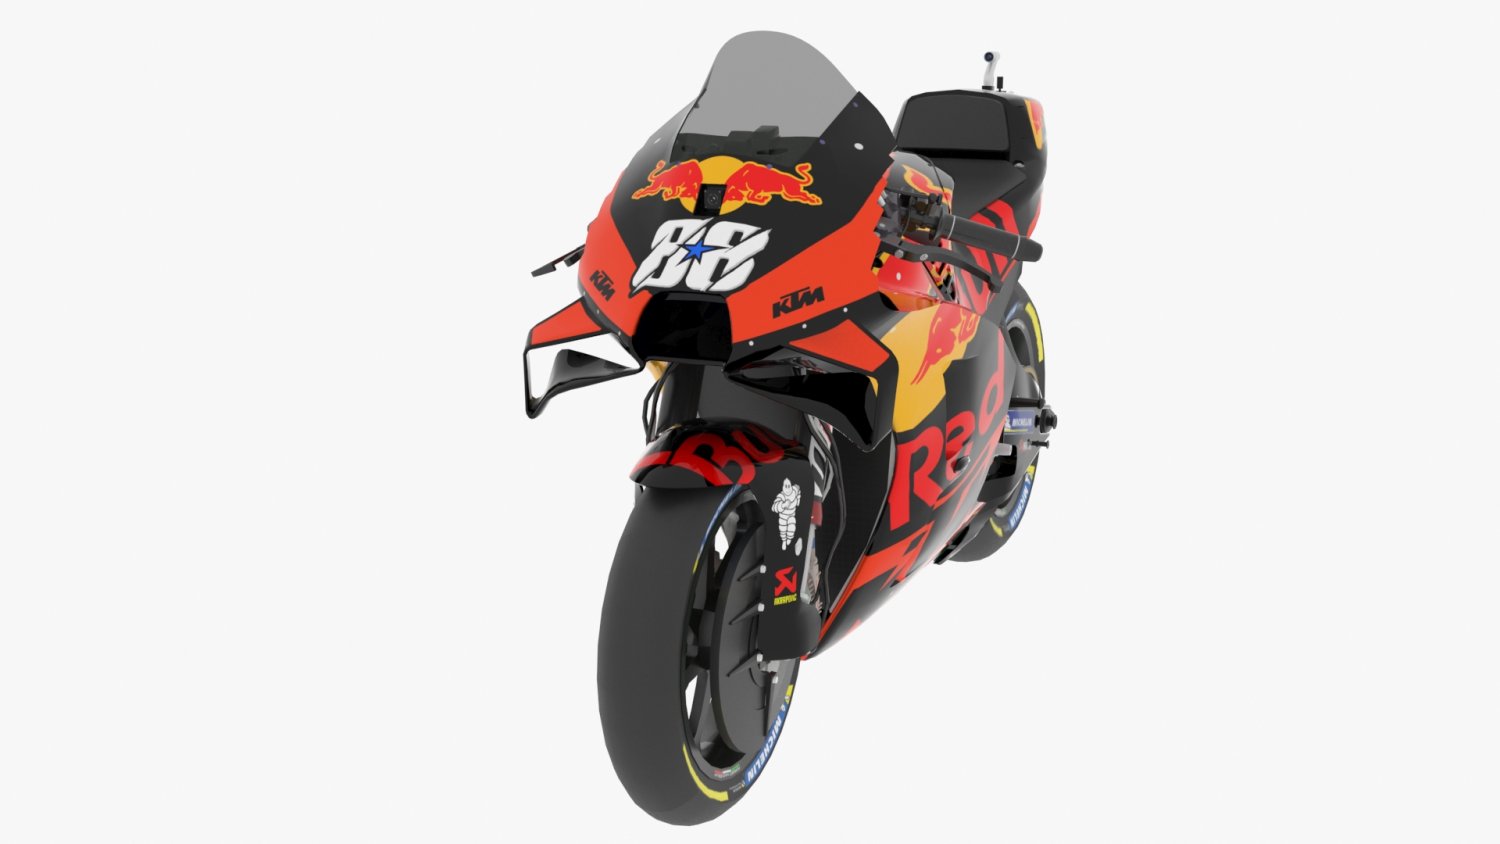 KTM Motor Sport Bike Racing 3D – Apps no Google Play